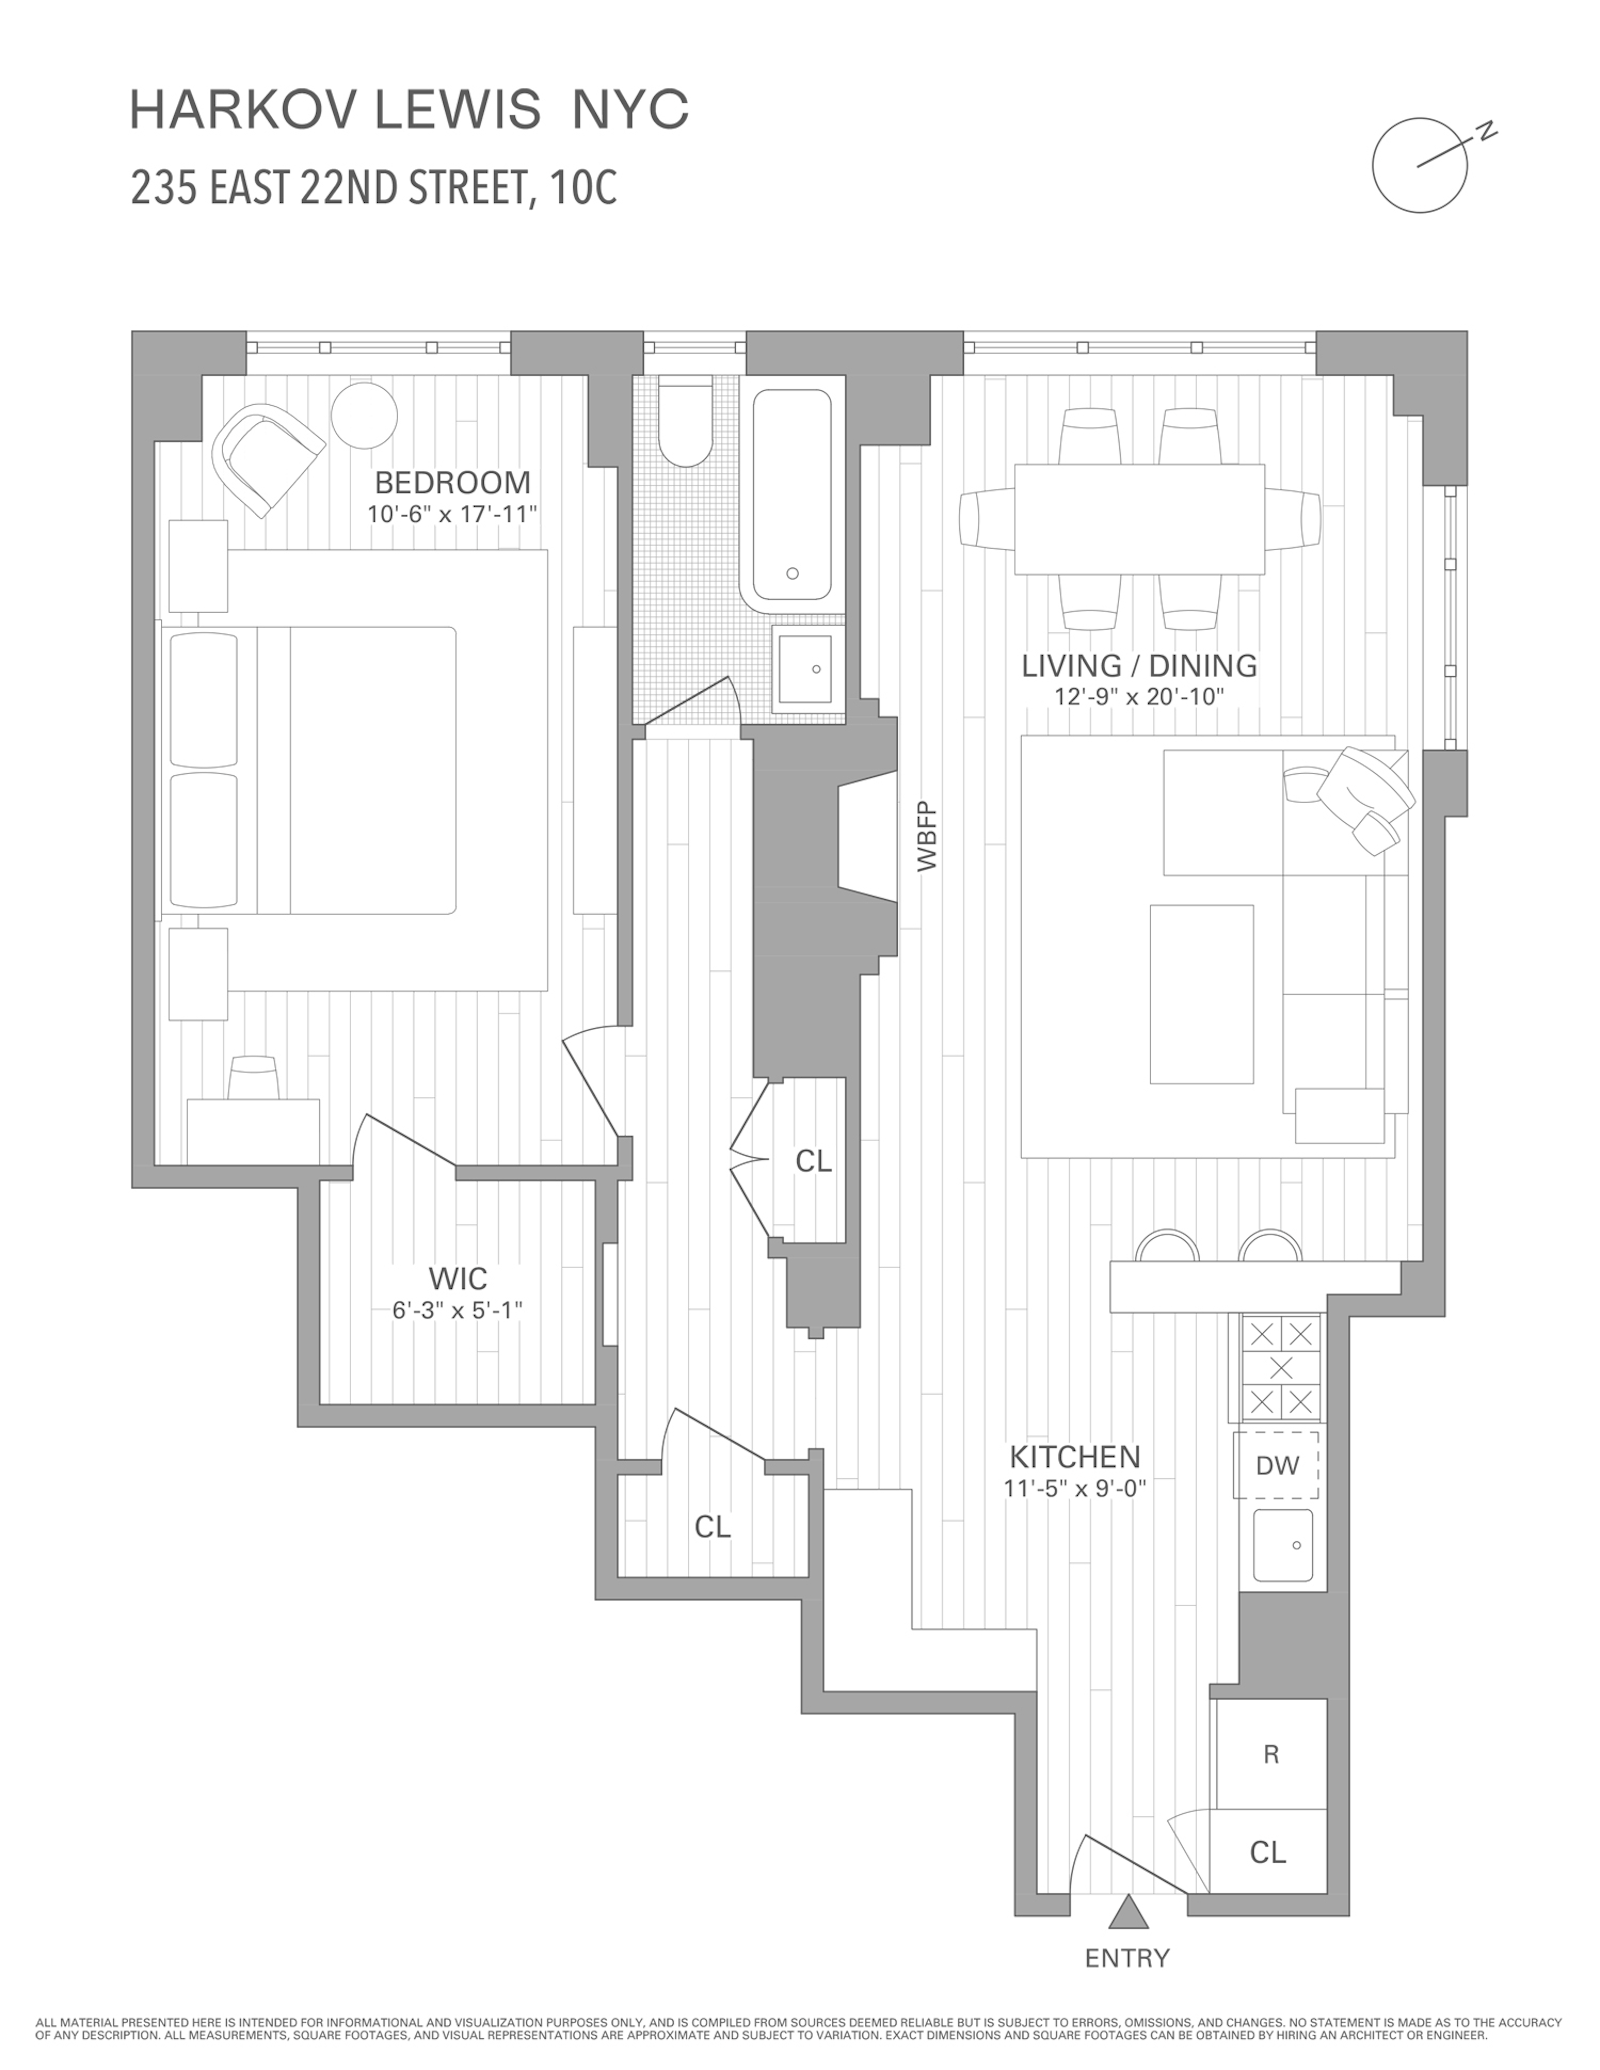 Floorplan for 235 East 22nd Street, 10C